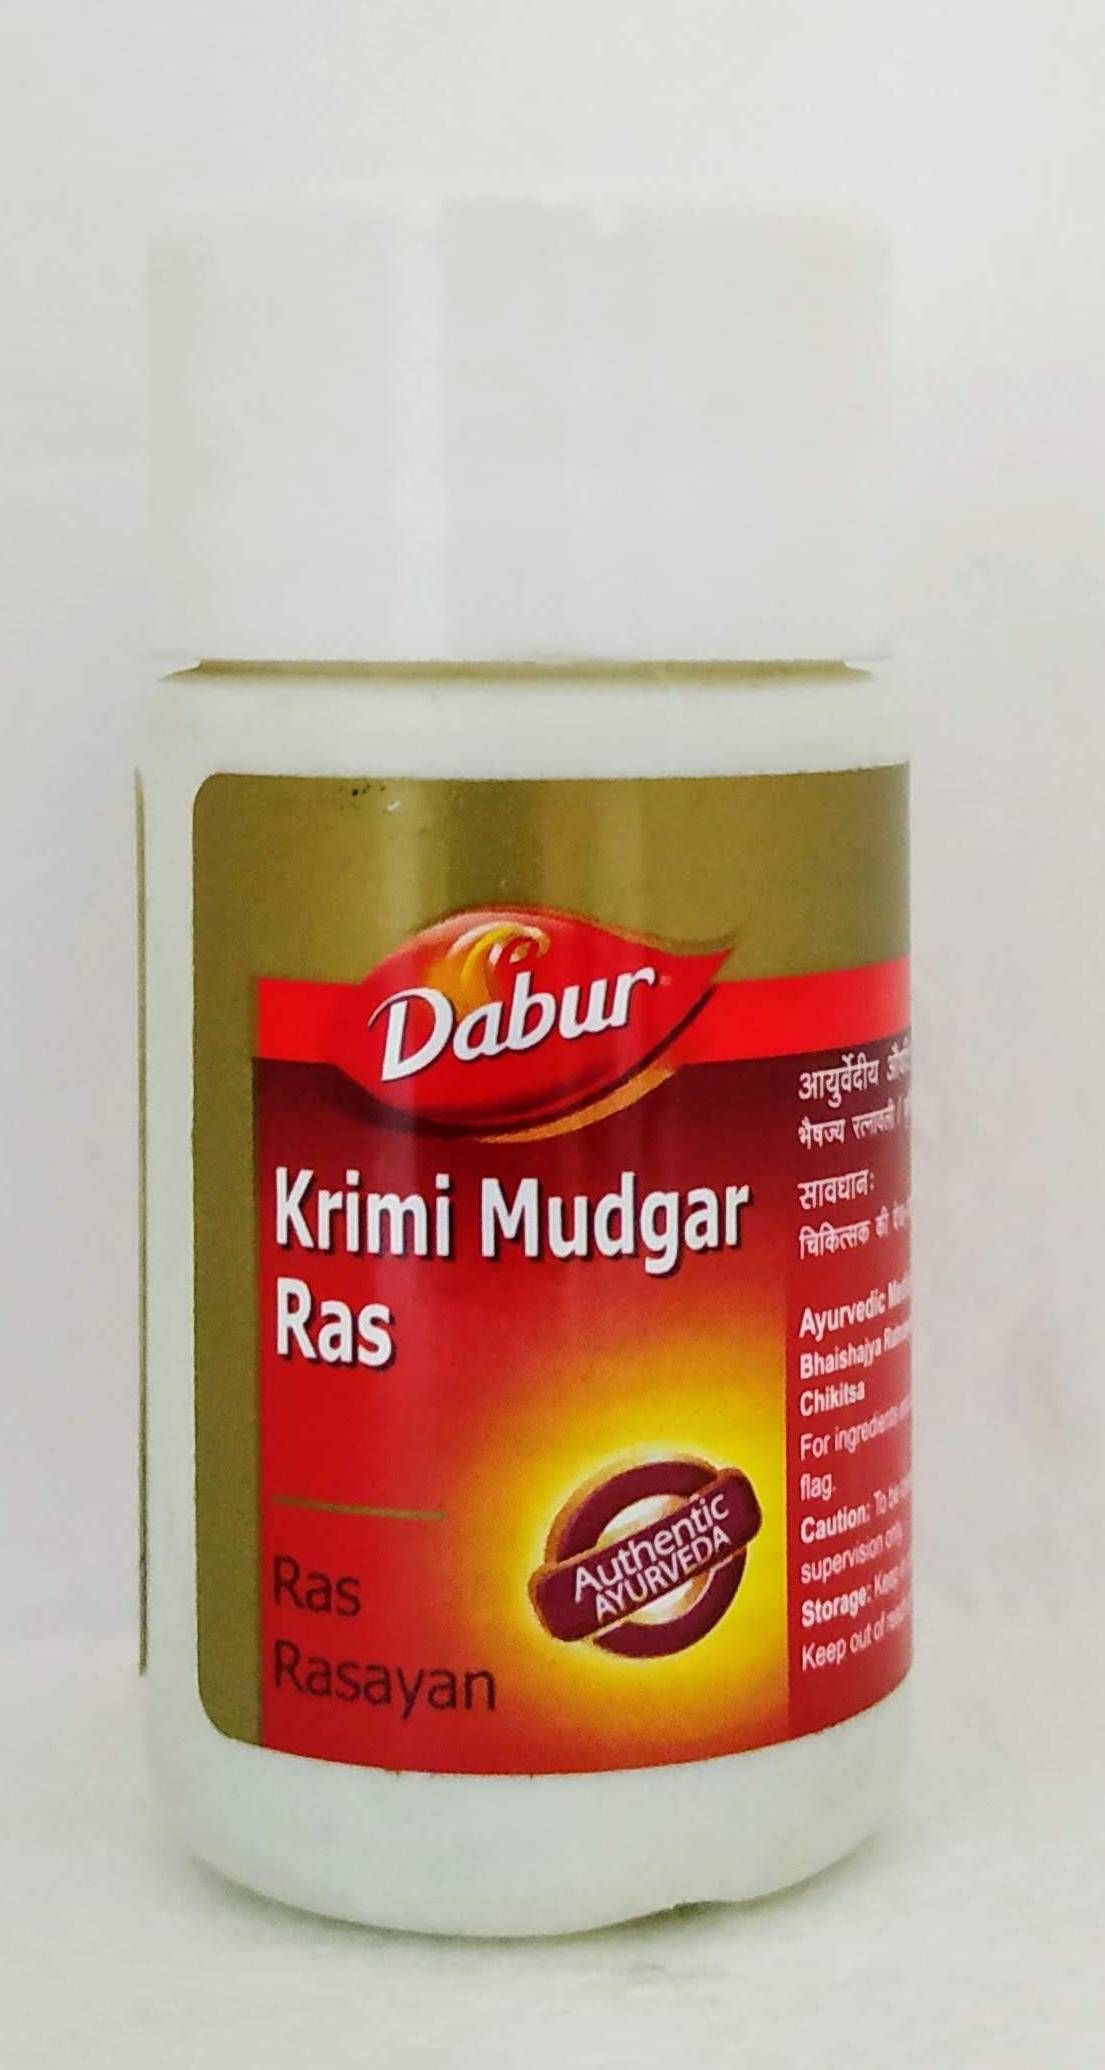 Shop Krimi Mudgar Ras - 40Tablets at price 75.00 from Dabur Online - Ayush Care